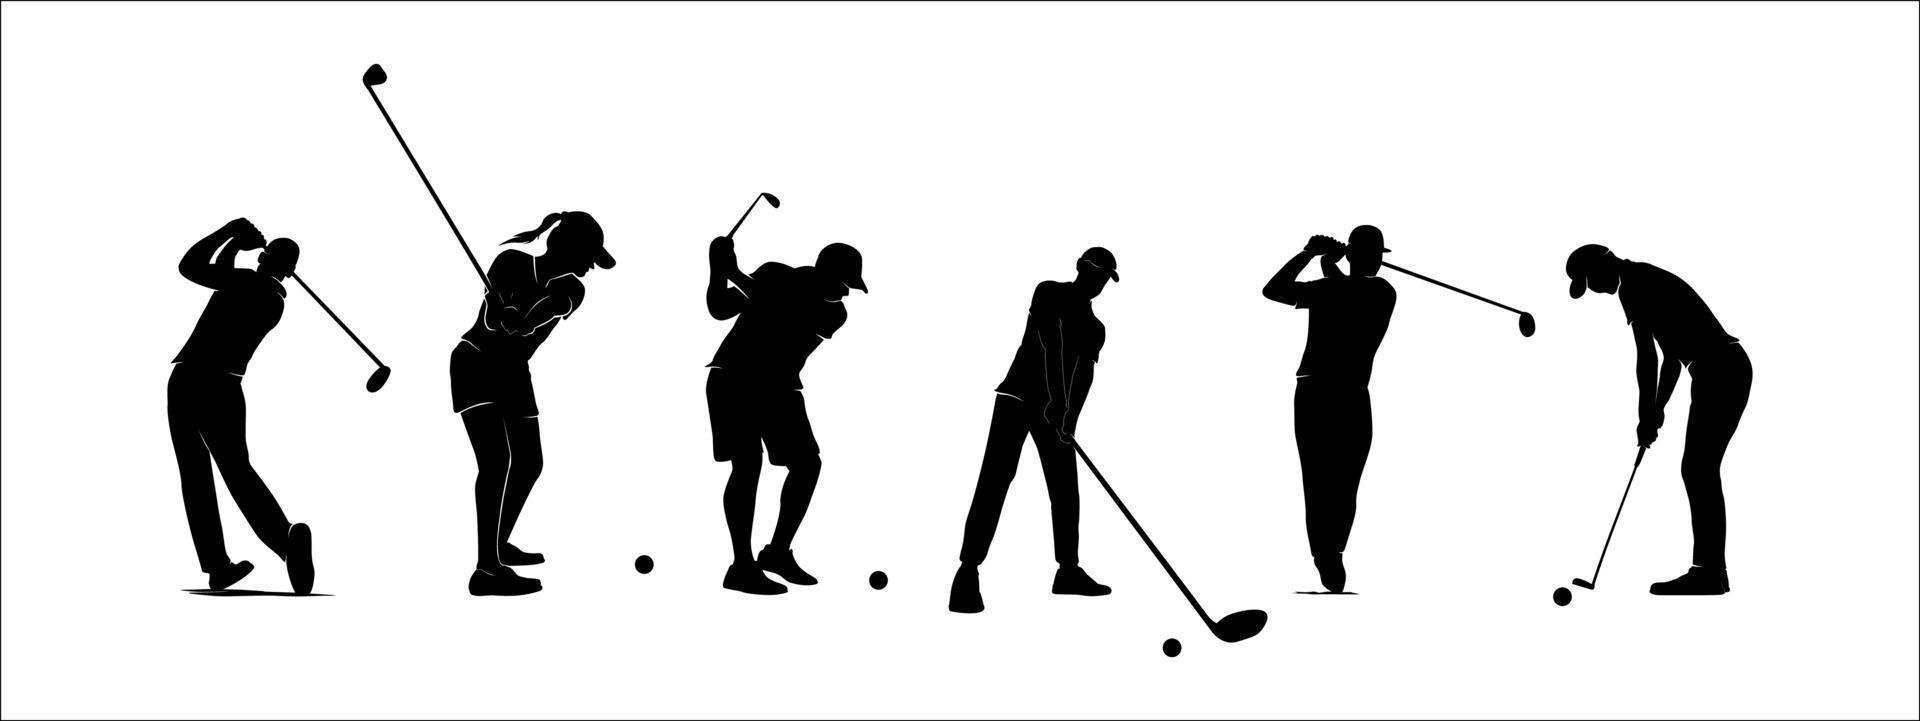 golf speler silhouet verzameling vector